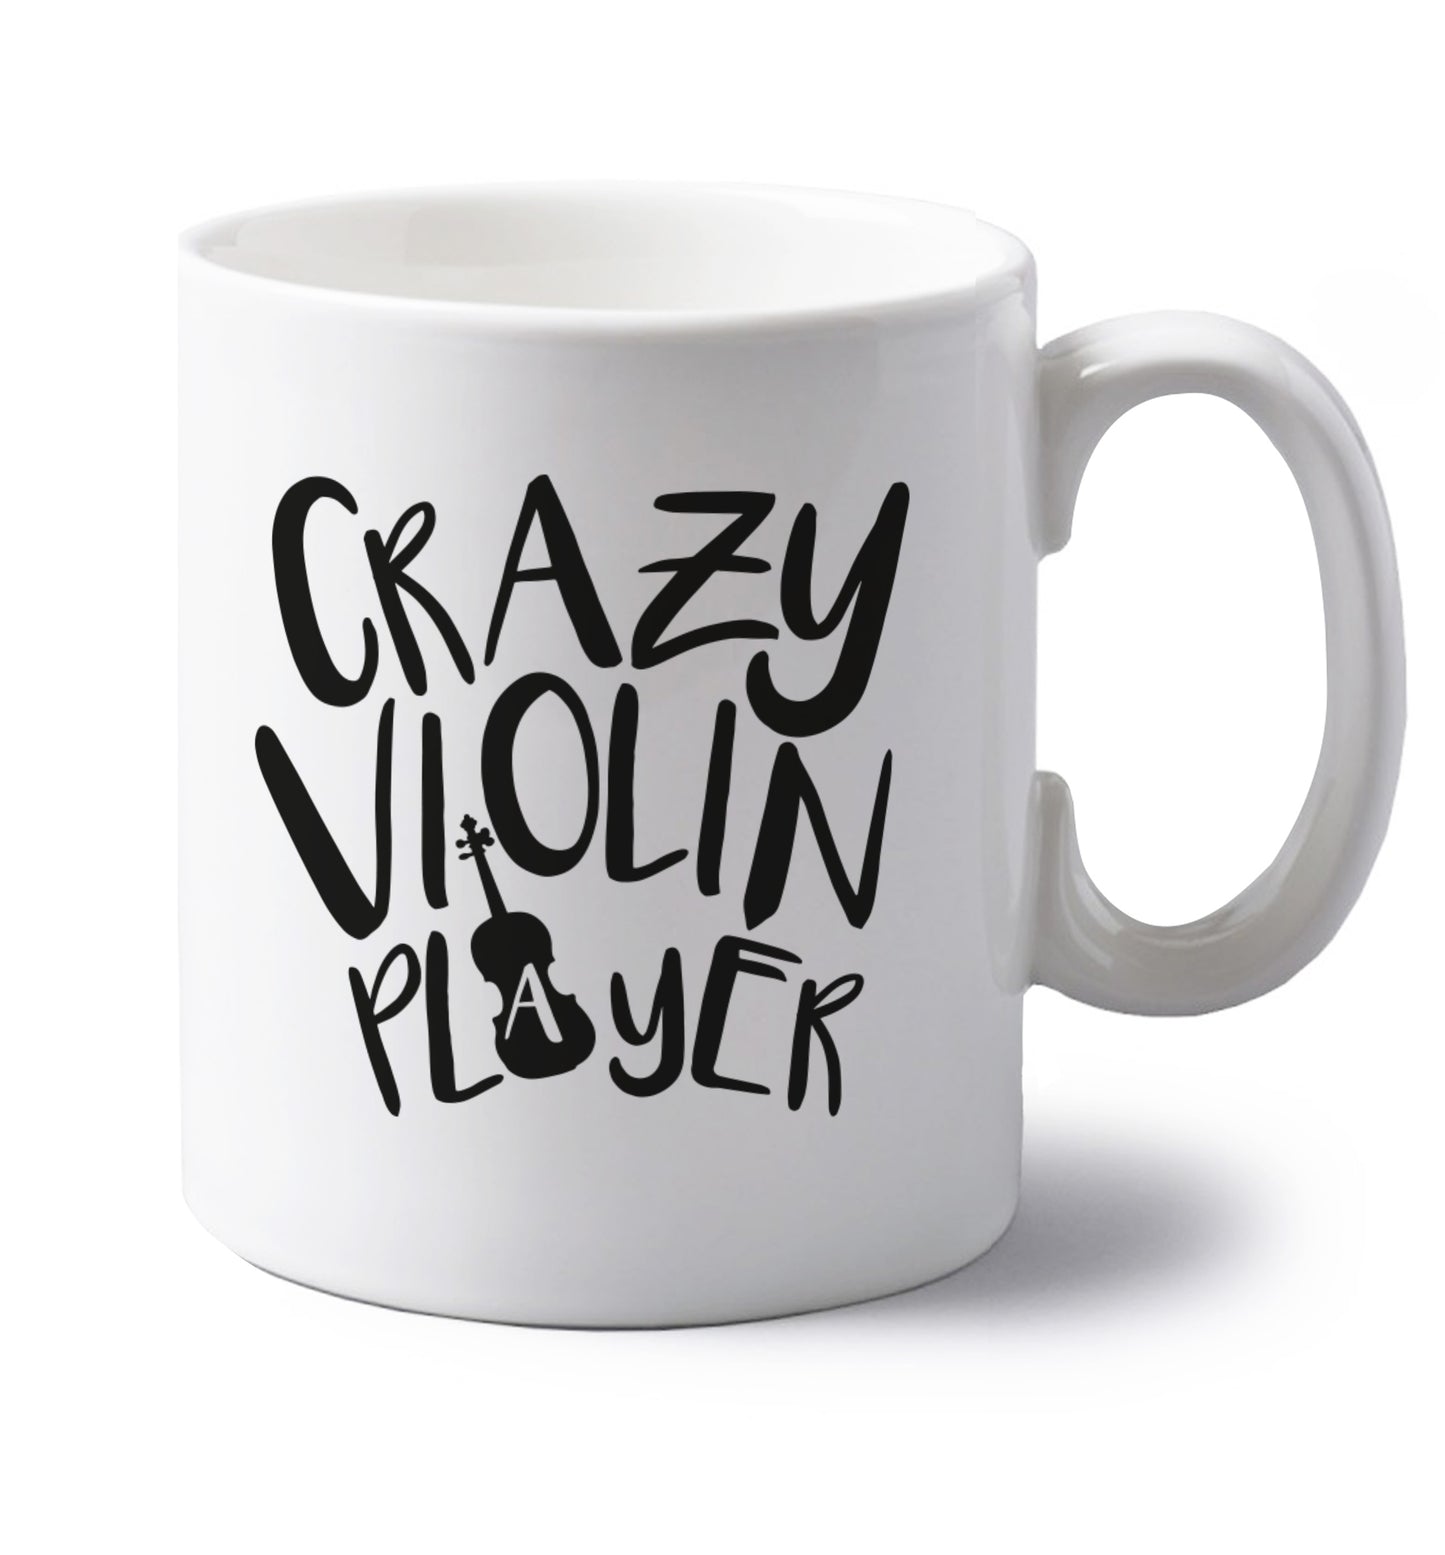 Crazy Violin Player left handed white ceramic mug 